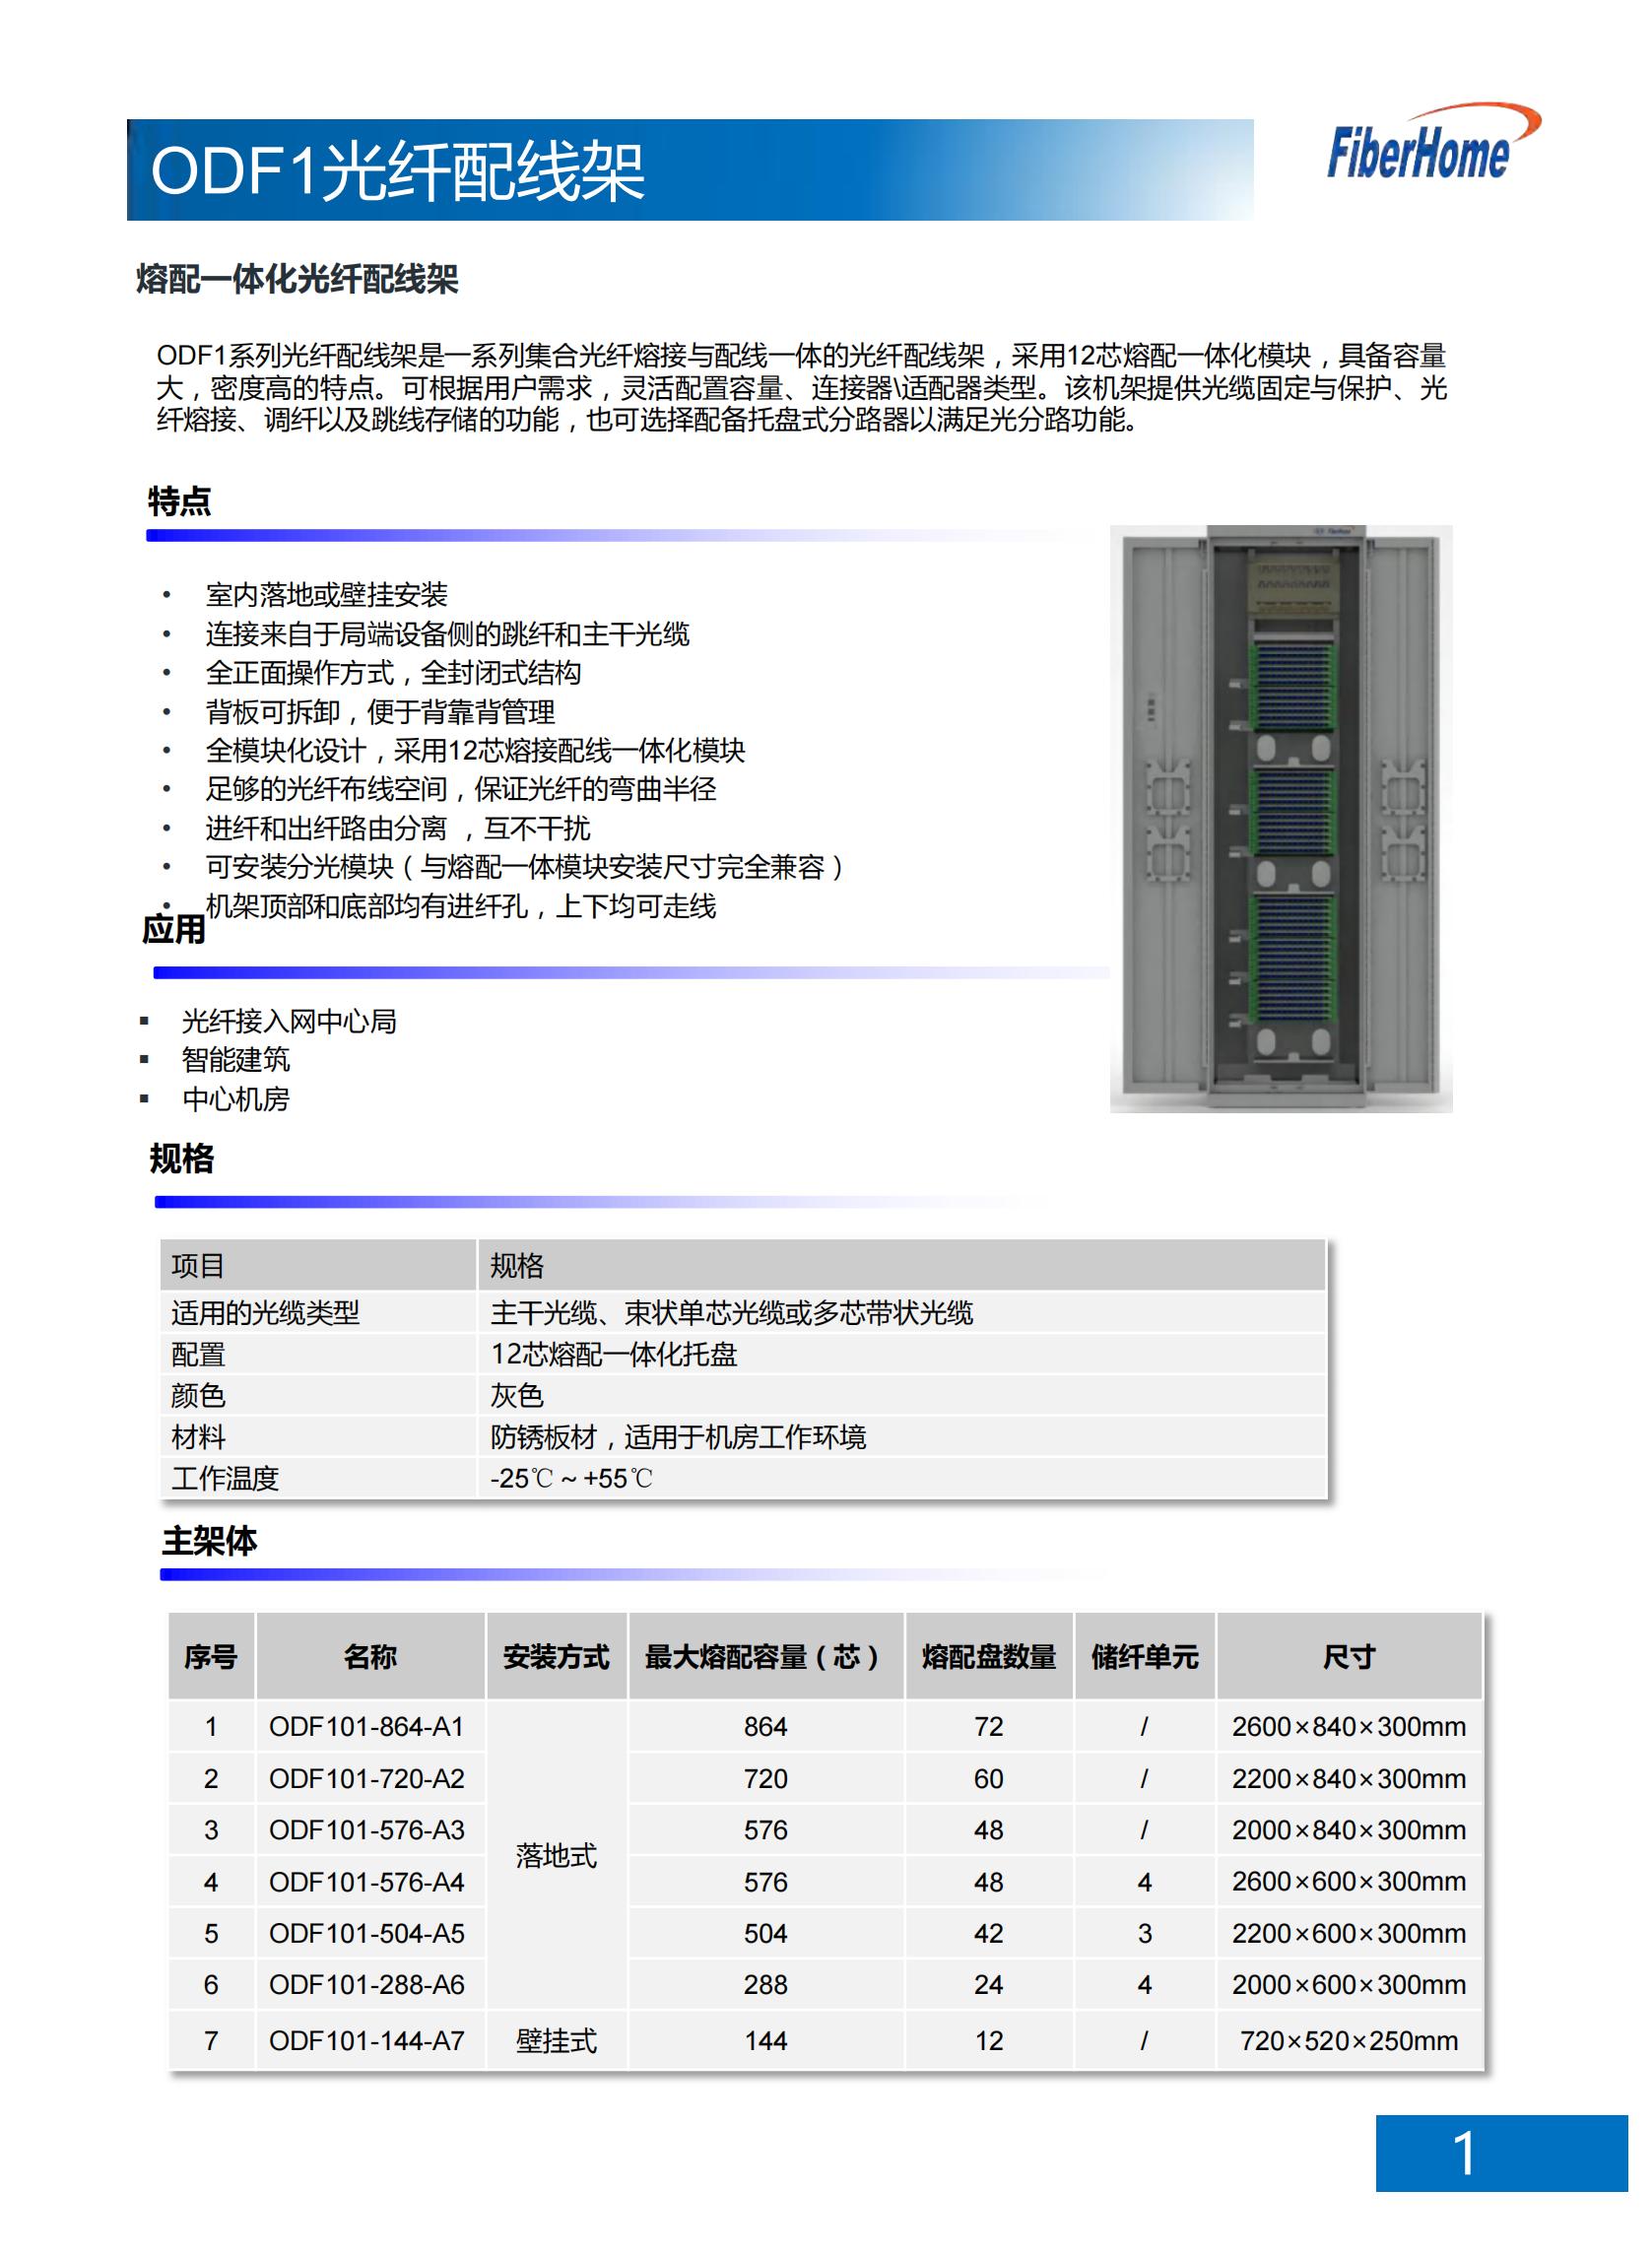 ODF101-288-A6-FC ODF光纤配线架 （288芯落地式 全部含12芯FC熔配一体化单元）